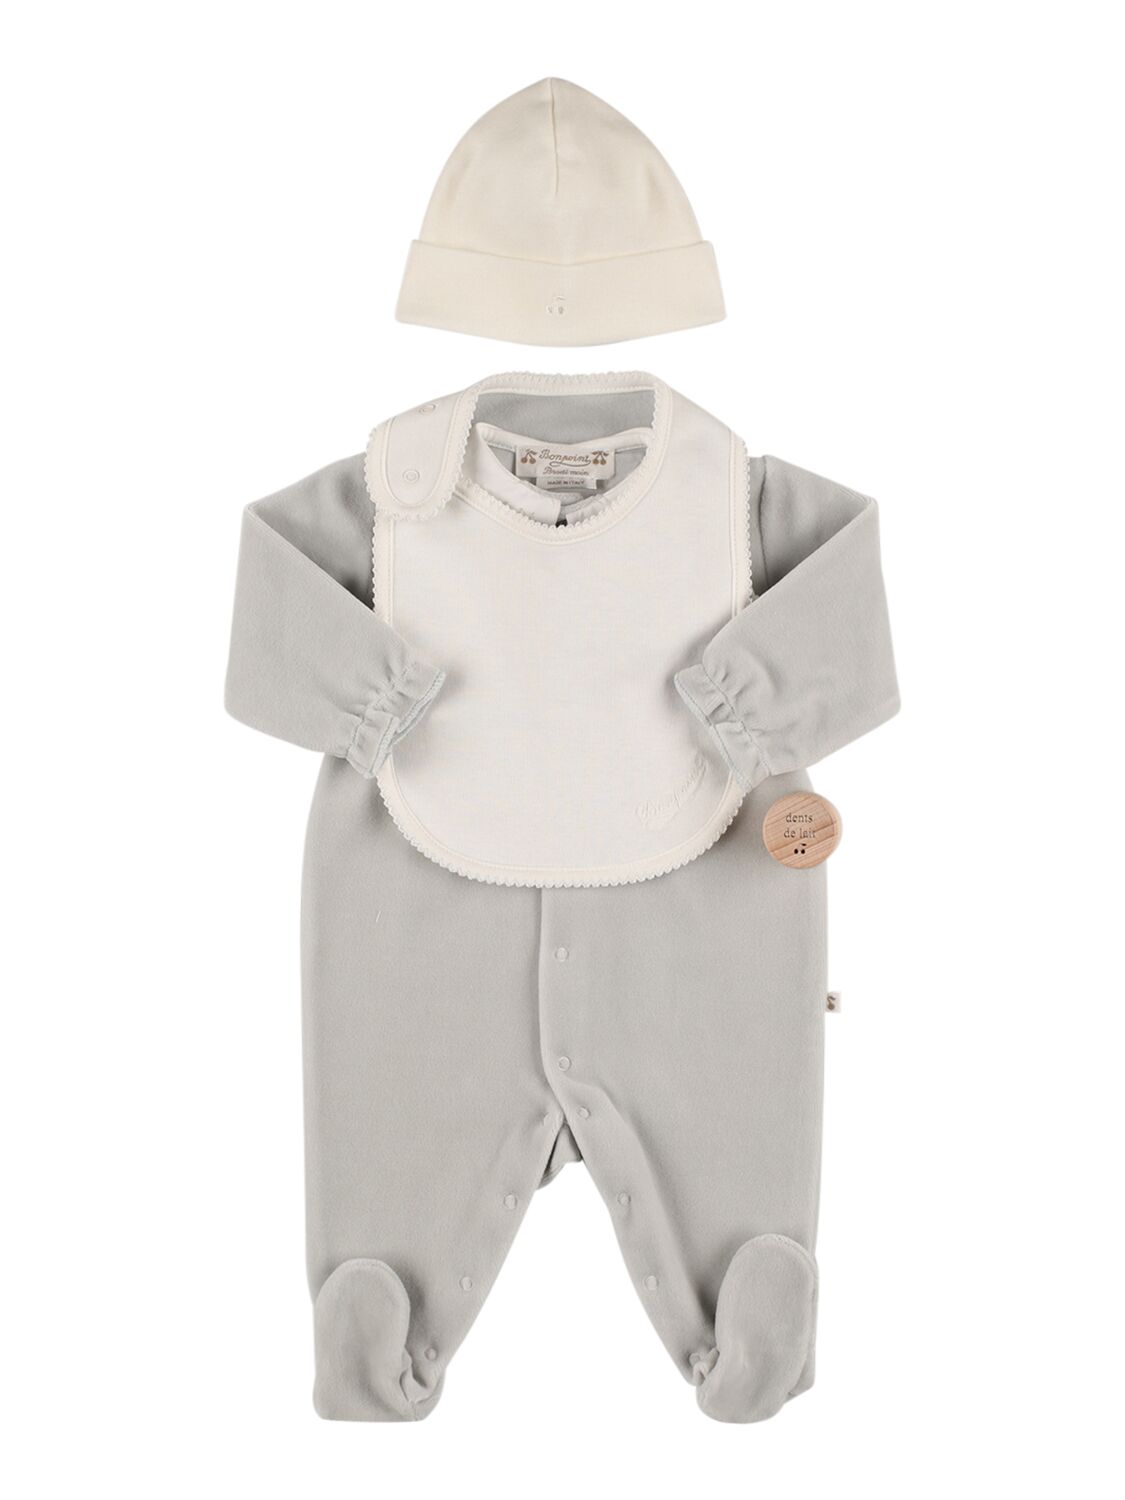 Bonpoint Babies' Cotton Bodysuit, Bib, Hat & Rattle In Grey